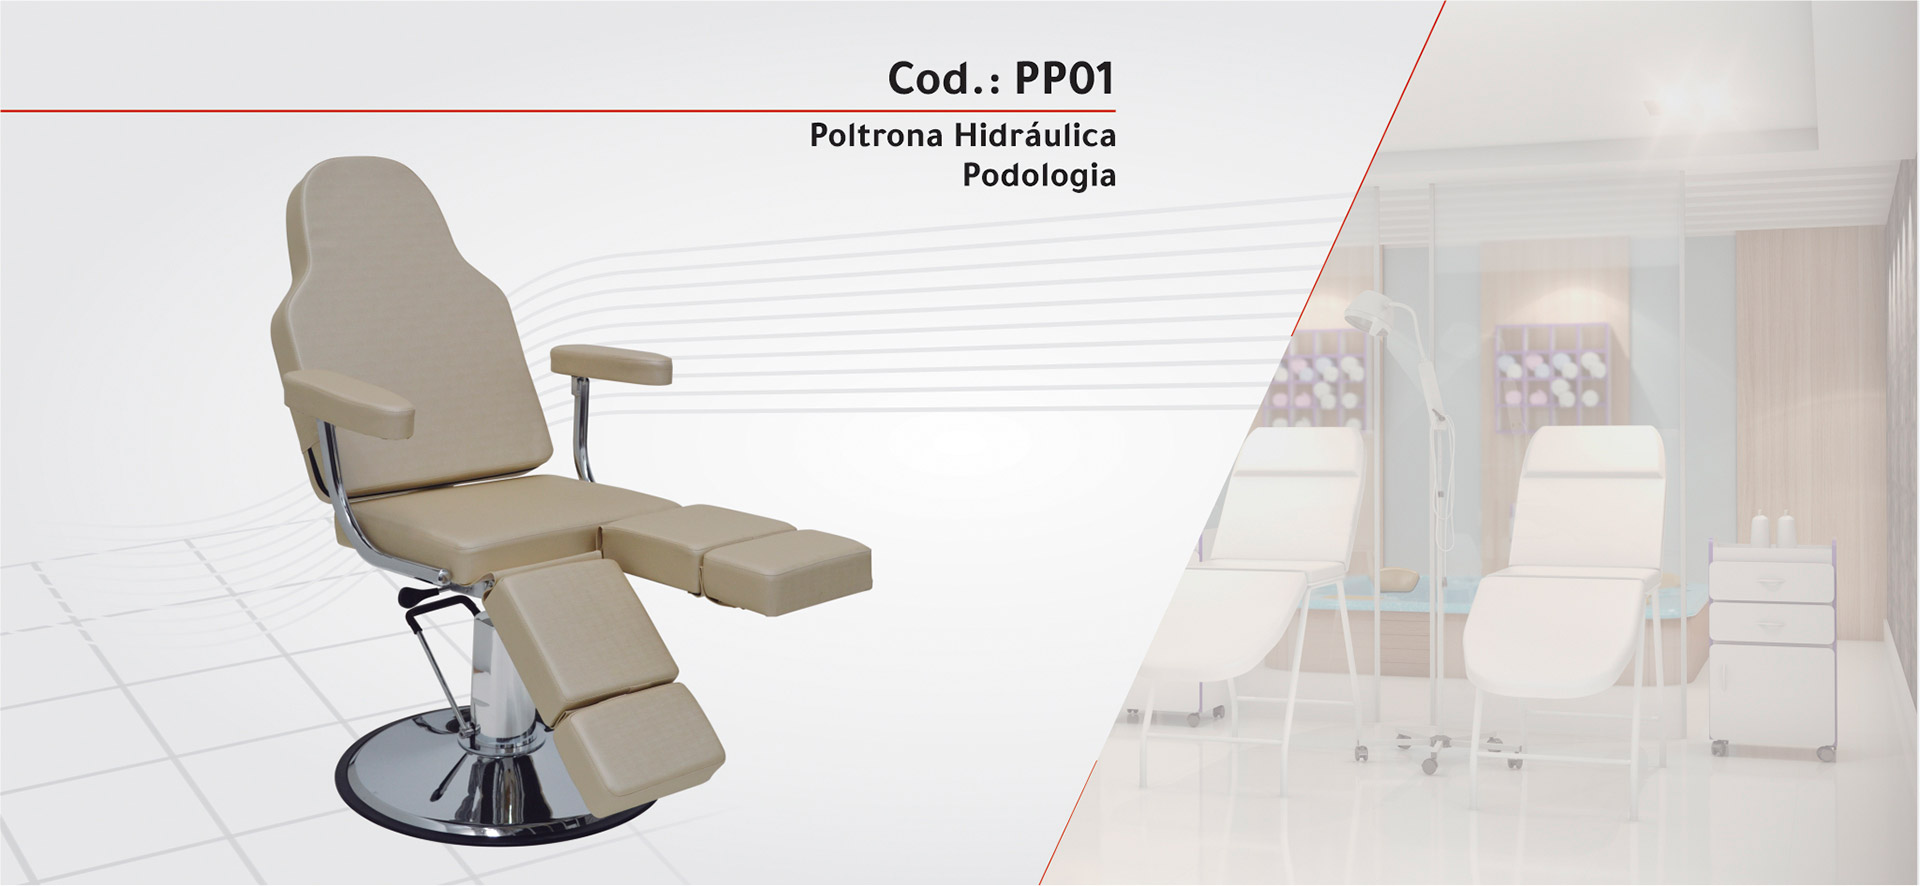 PP01 - Poltrona Hidráulica Podologia